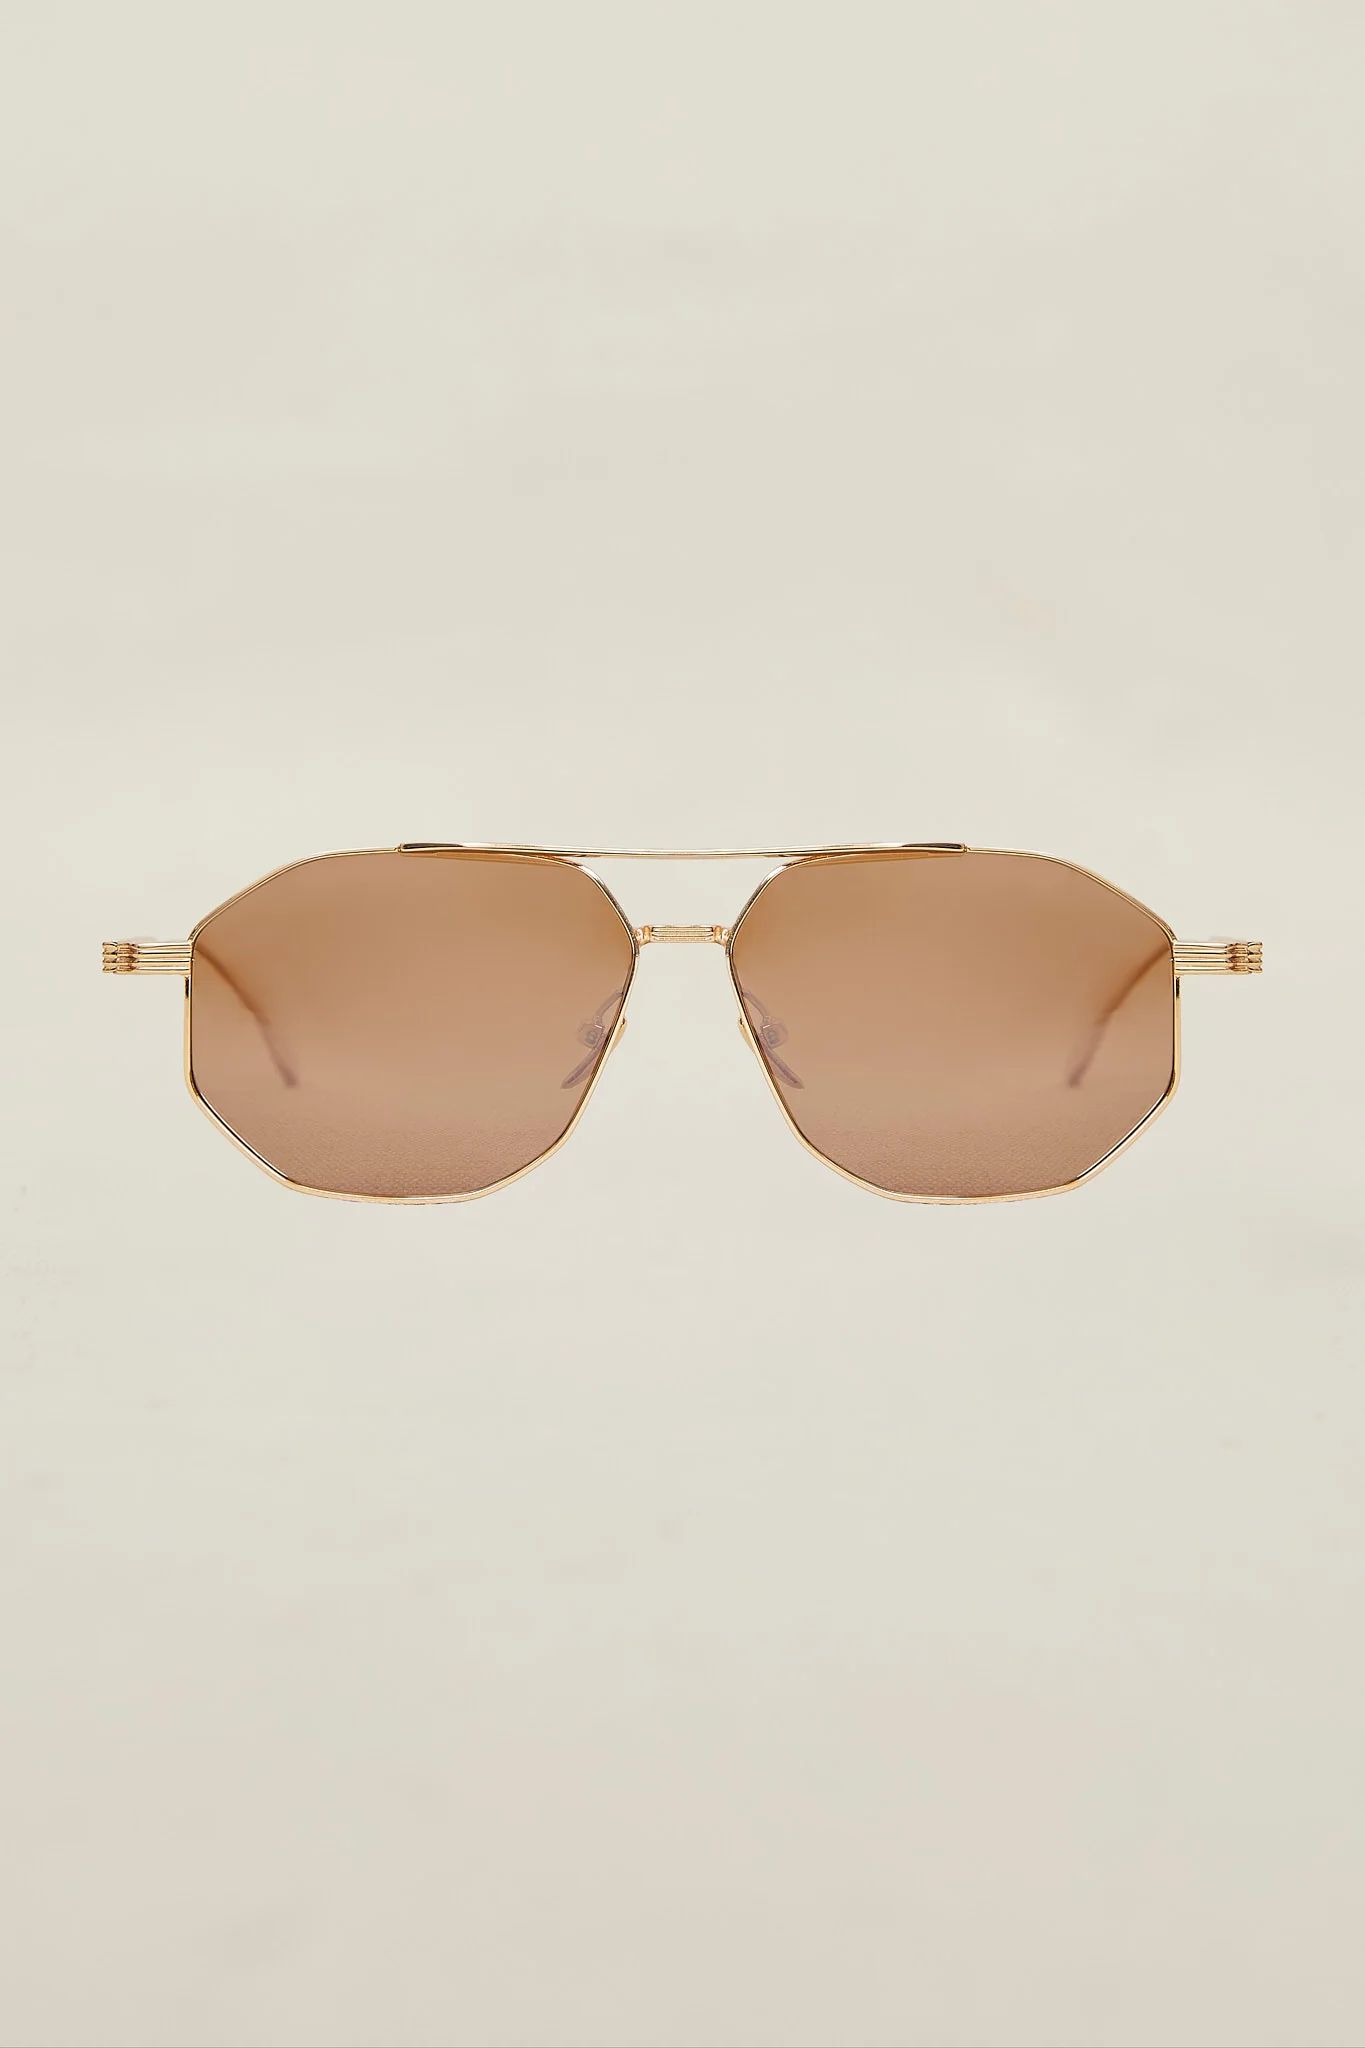 Cairo Sunglasses | Devon Windsor